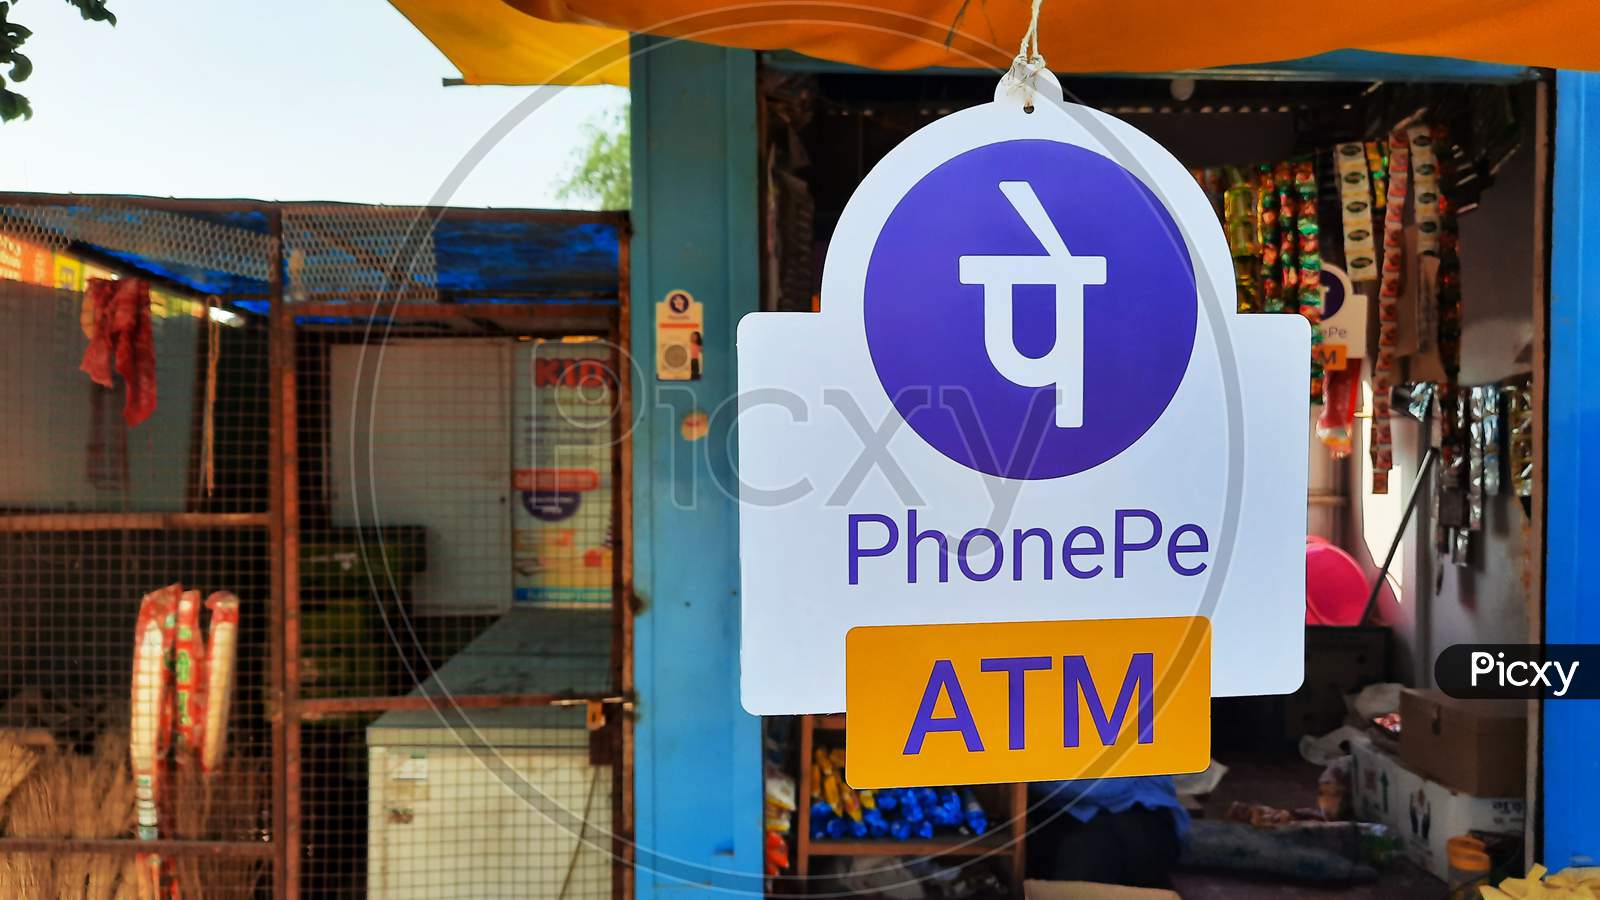 Jhunjhunun, India - 10.28.2020 : Phonepe Atm Stickers Outside A Small Shop